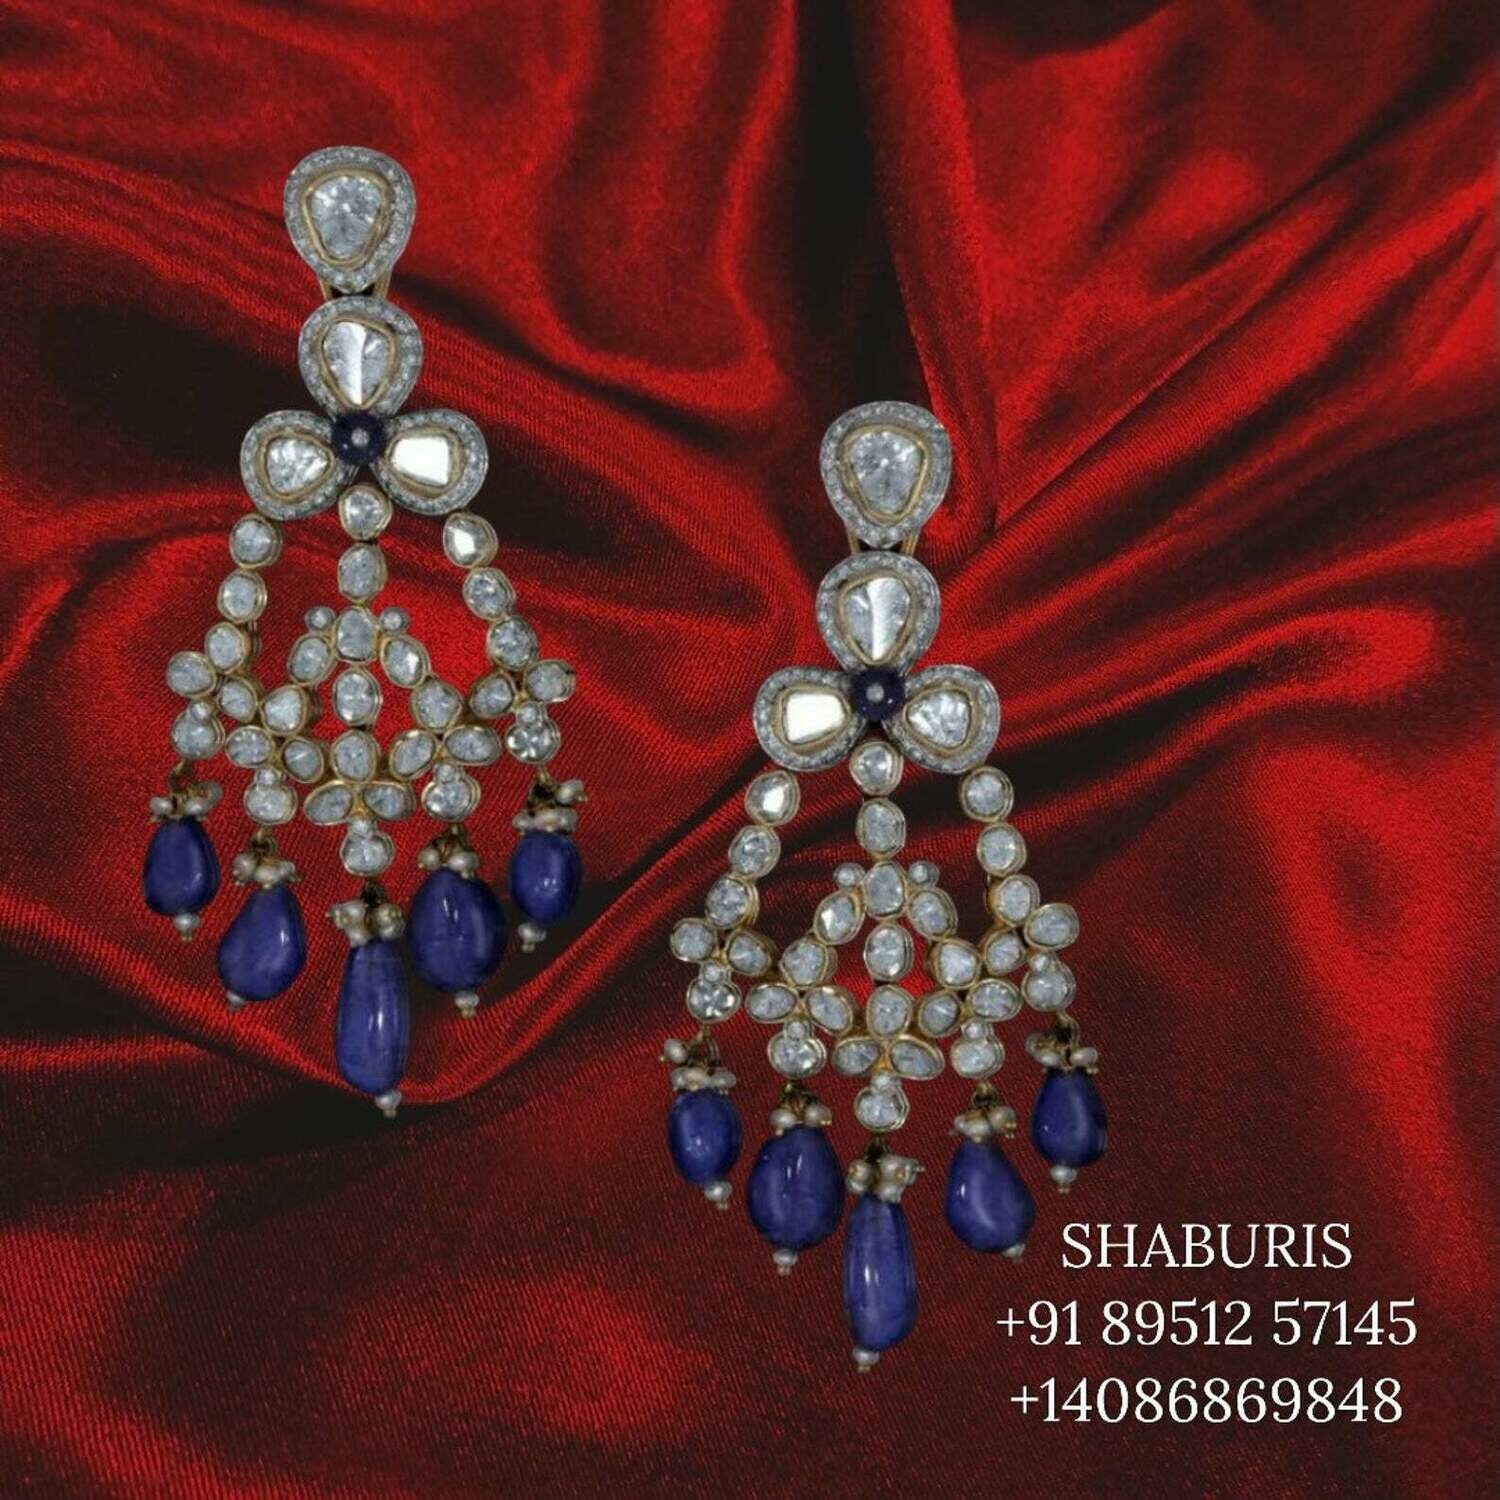 Polki Jewelry,South Indian Jewelry,blue saphire,diamond jewelry,moissanite earrings pure silver jewelry online designs - SHABURIS